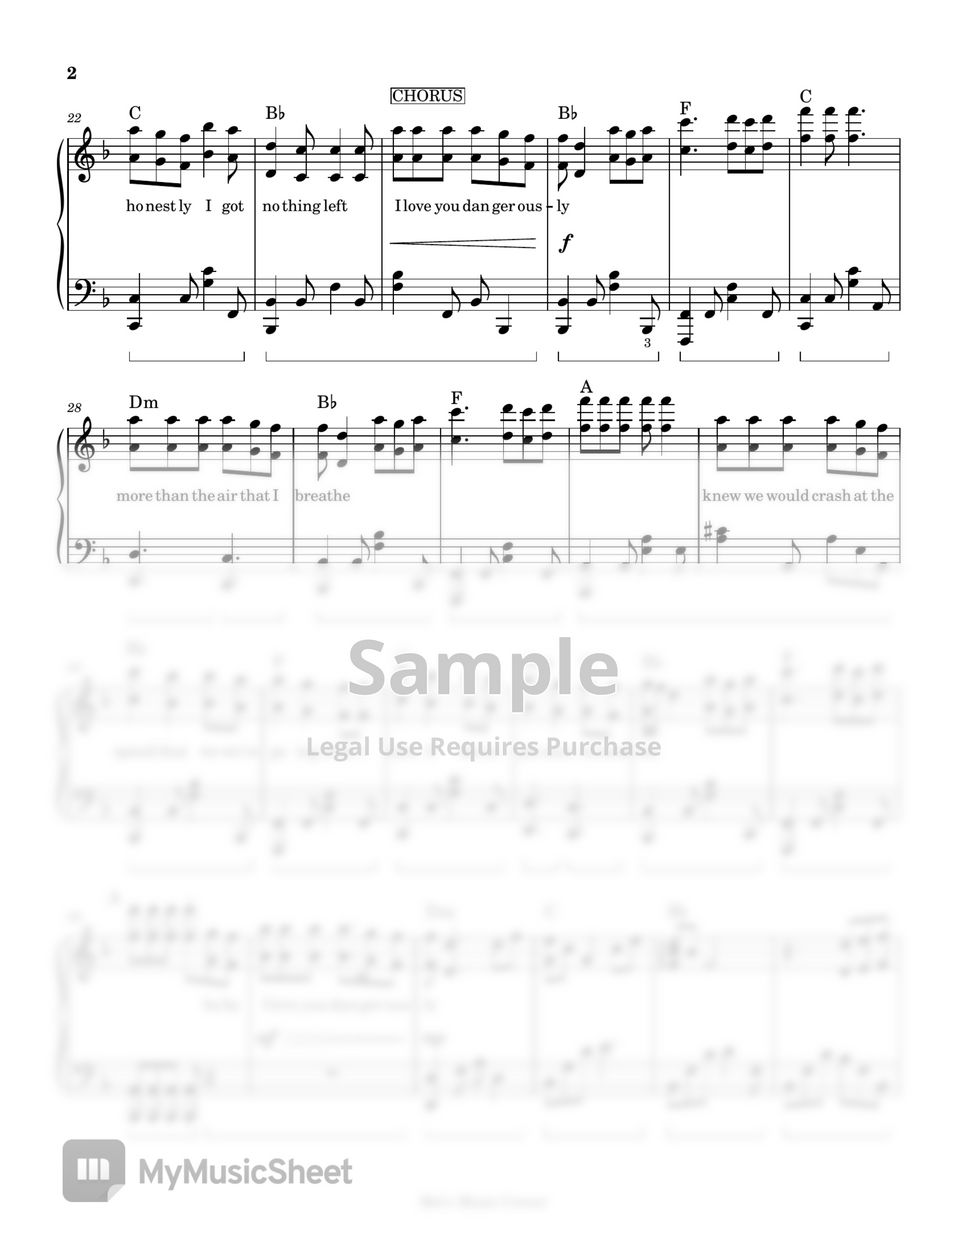 Charlie Puth - Dangerously (piano sheet music) by Mel's Music Corner